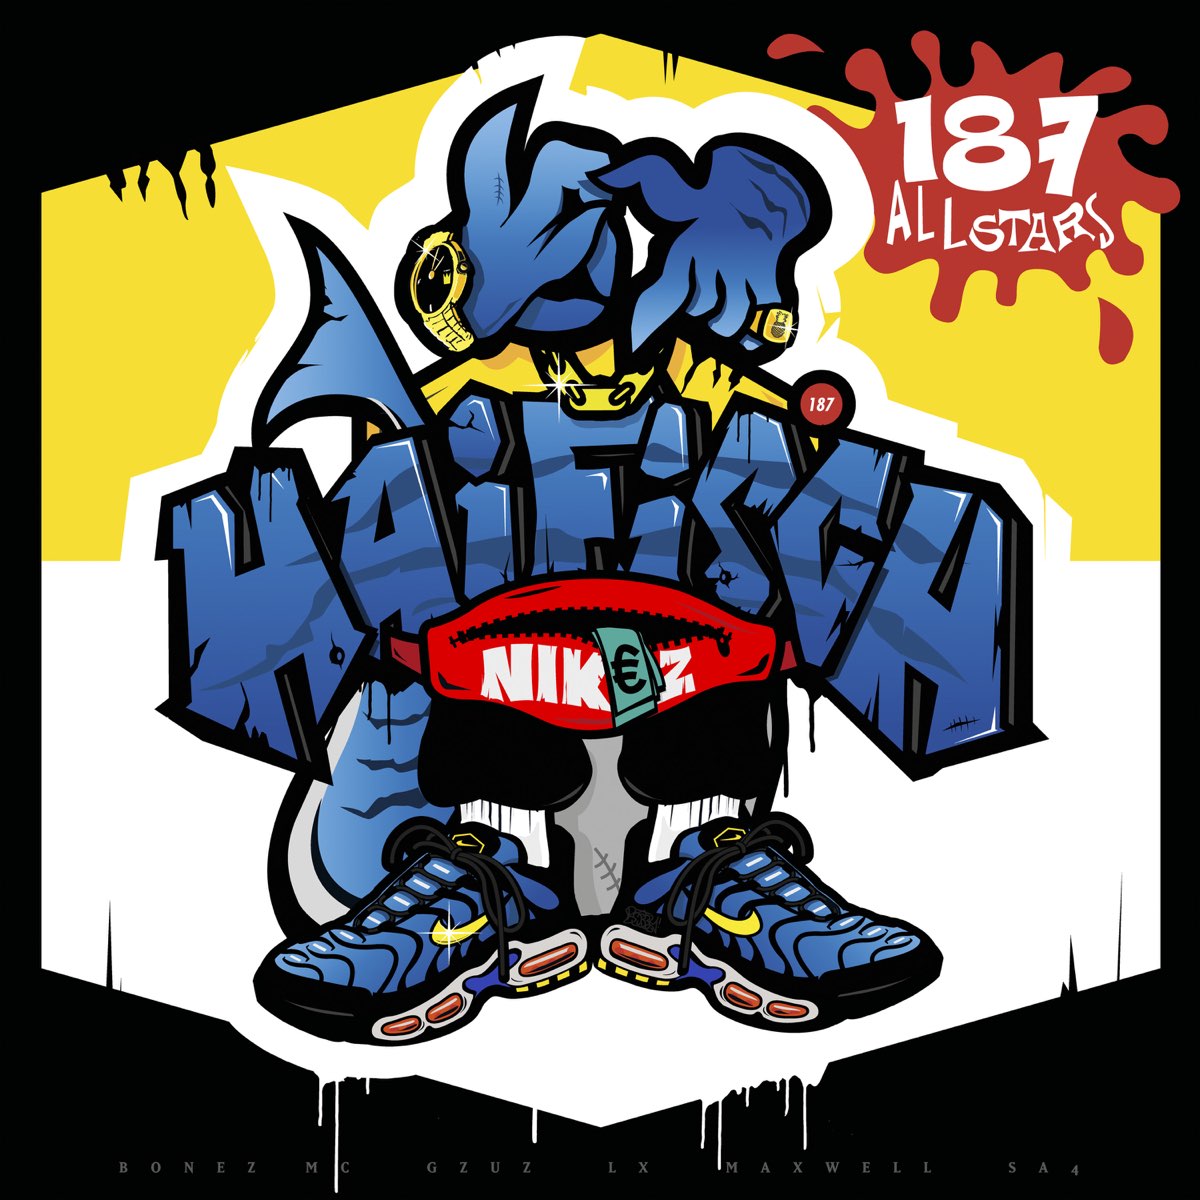 HaifischNikez Allstars (feat. Bonez MC, Gzuz & Sa4) - Single - Album by LX  & Maxwell - Apple Music